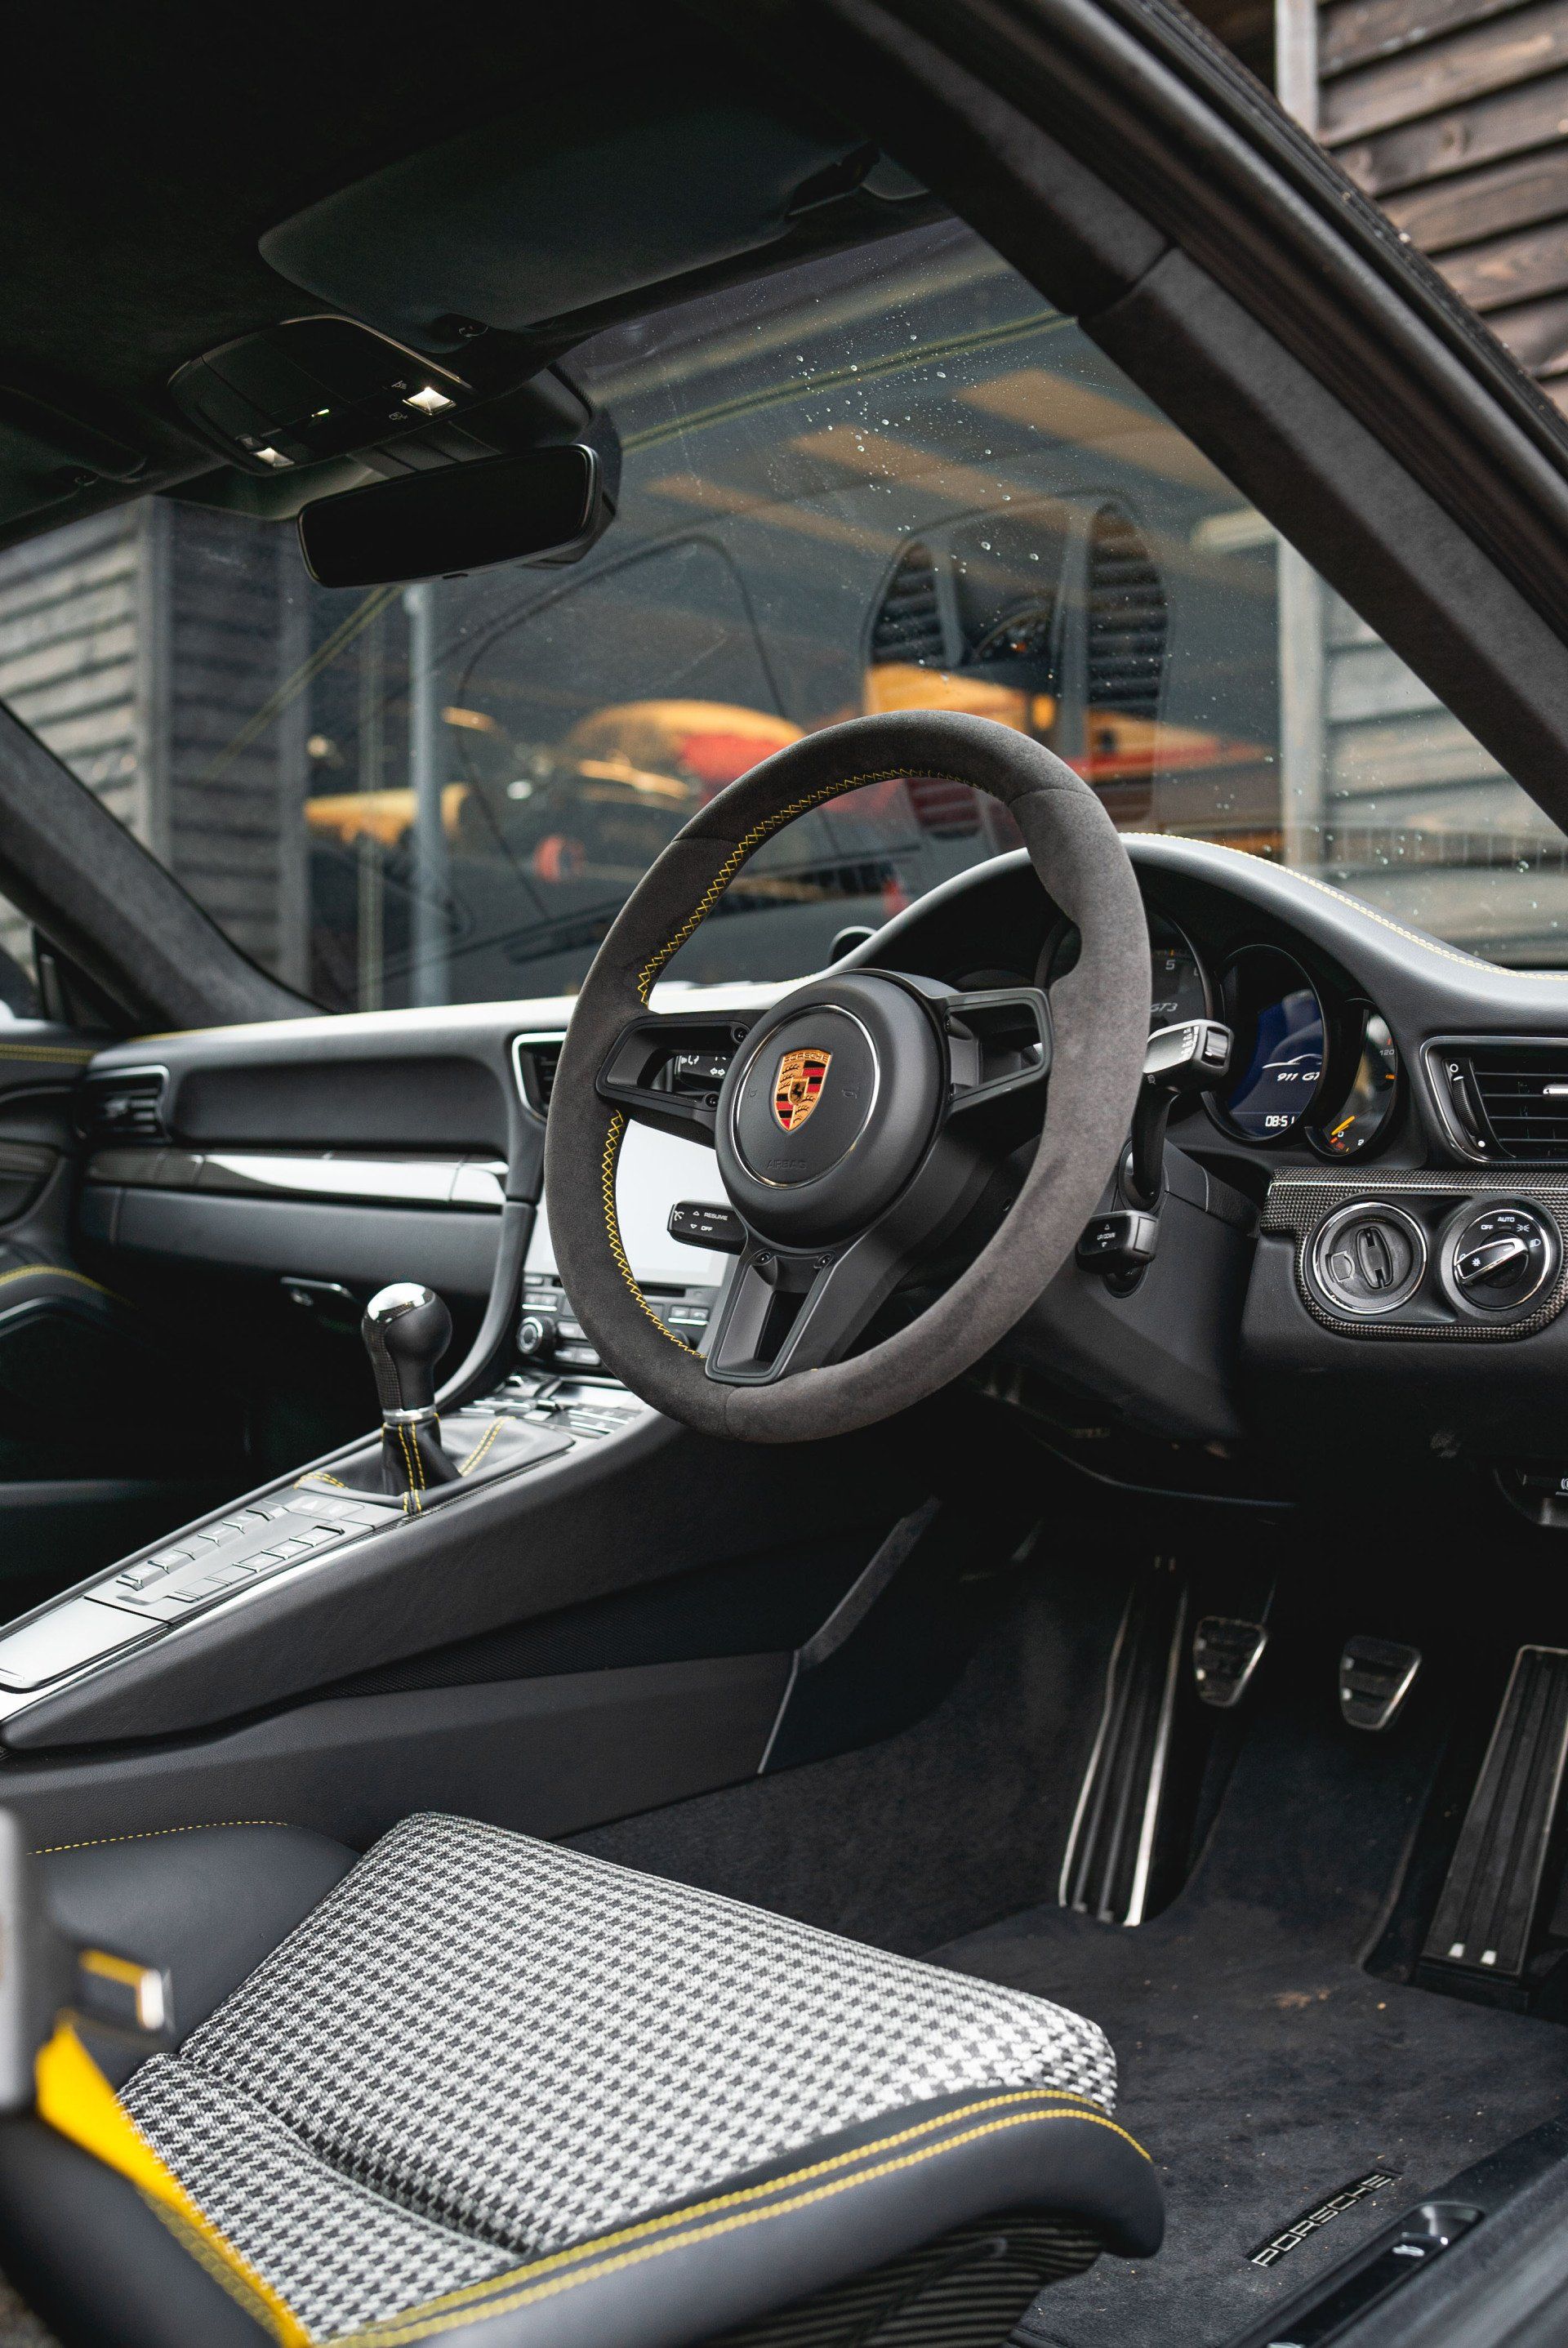 Porsche 911 gt3 steering wheel retrim alcantara graphite grey yellow stitch stitching dclass d:class